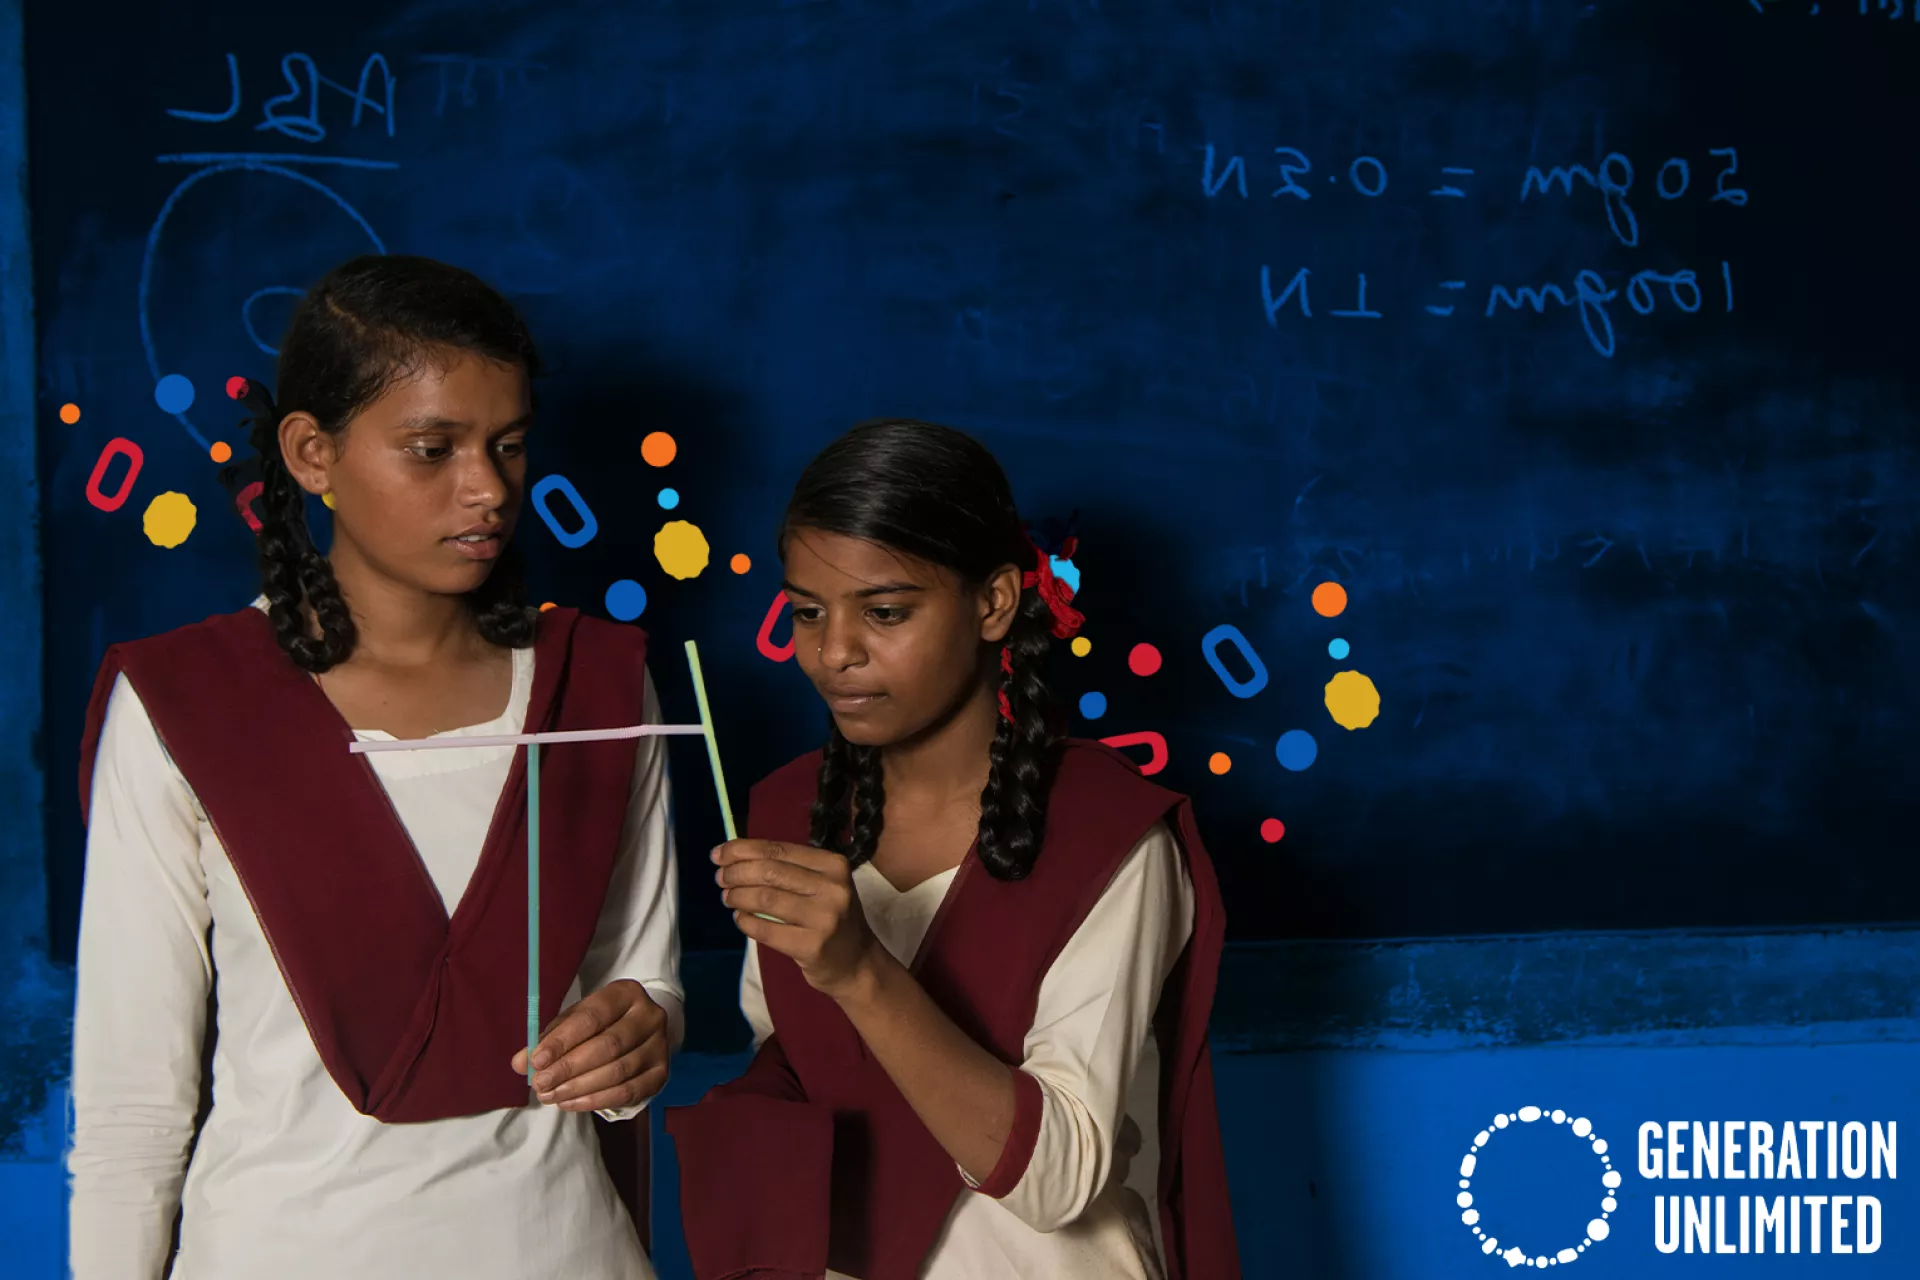 Two girls in front of a classroom blackboard